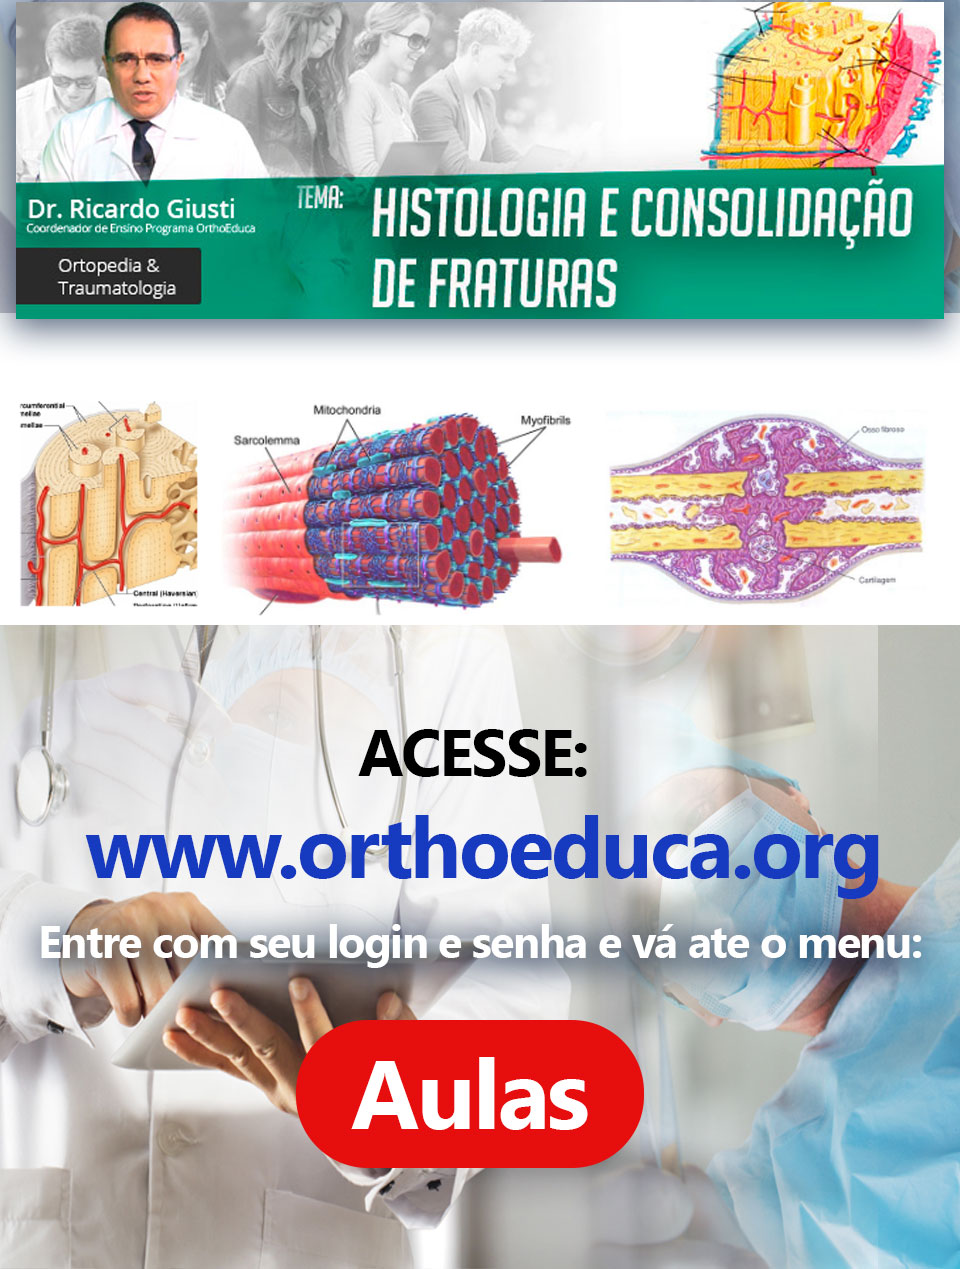 Histologia e Consolidao de Fraturas: OrthoEduca convida: Vamos estudar juntos?